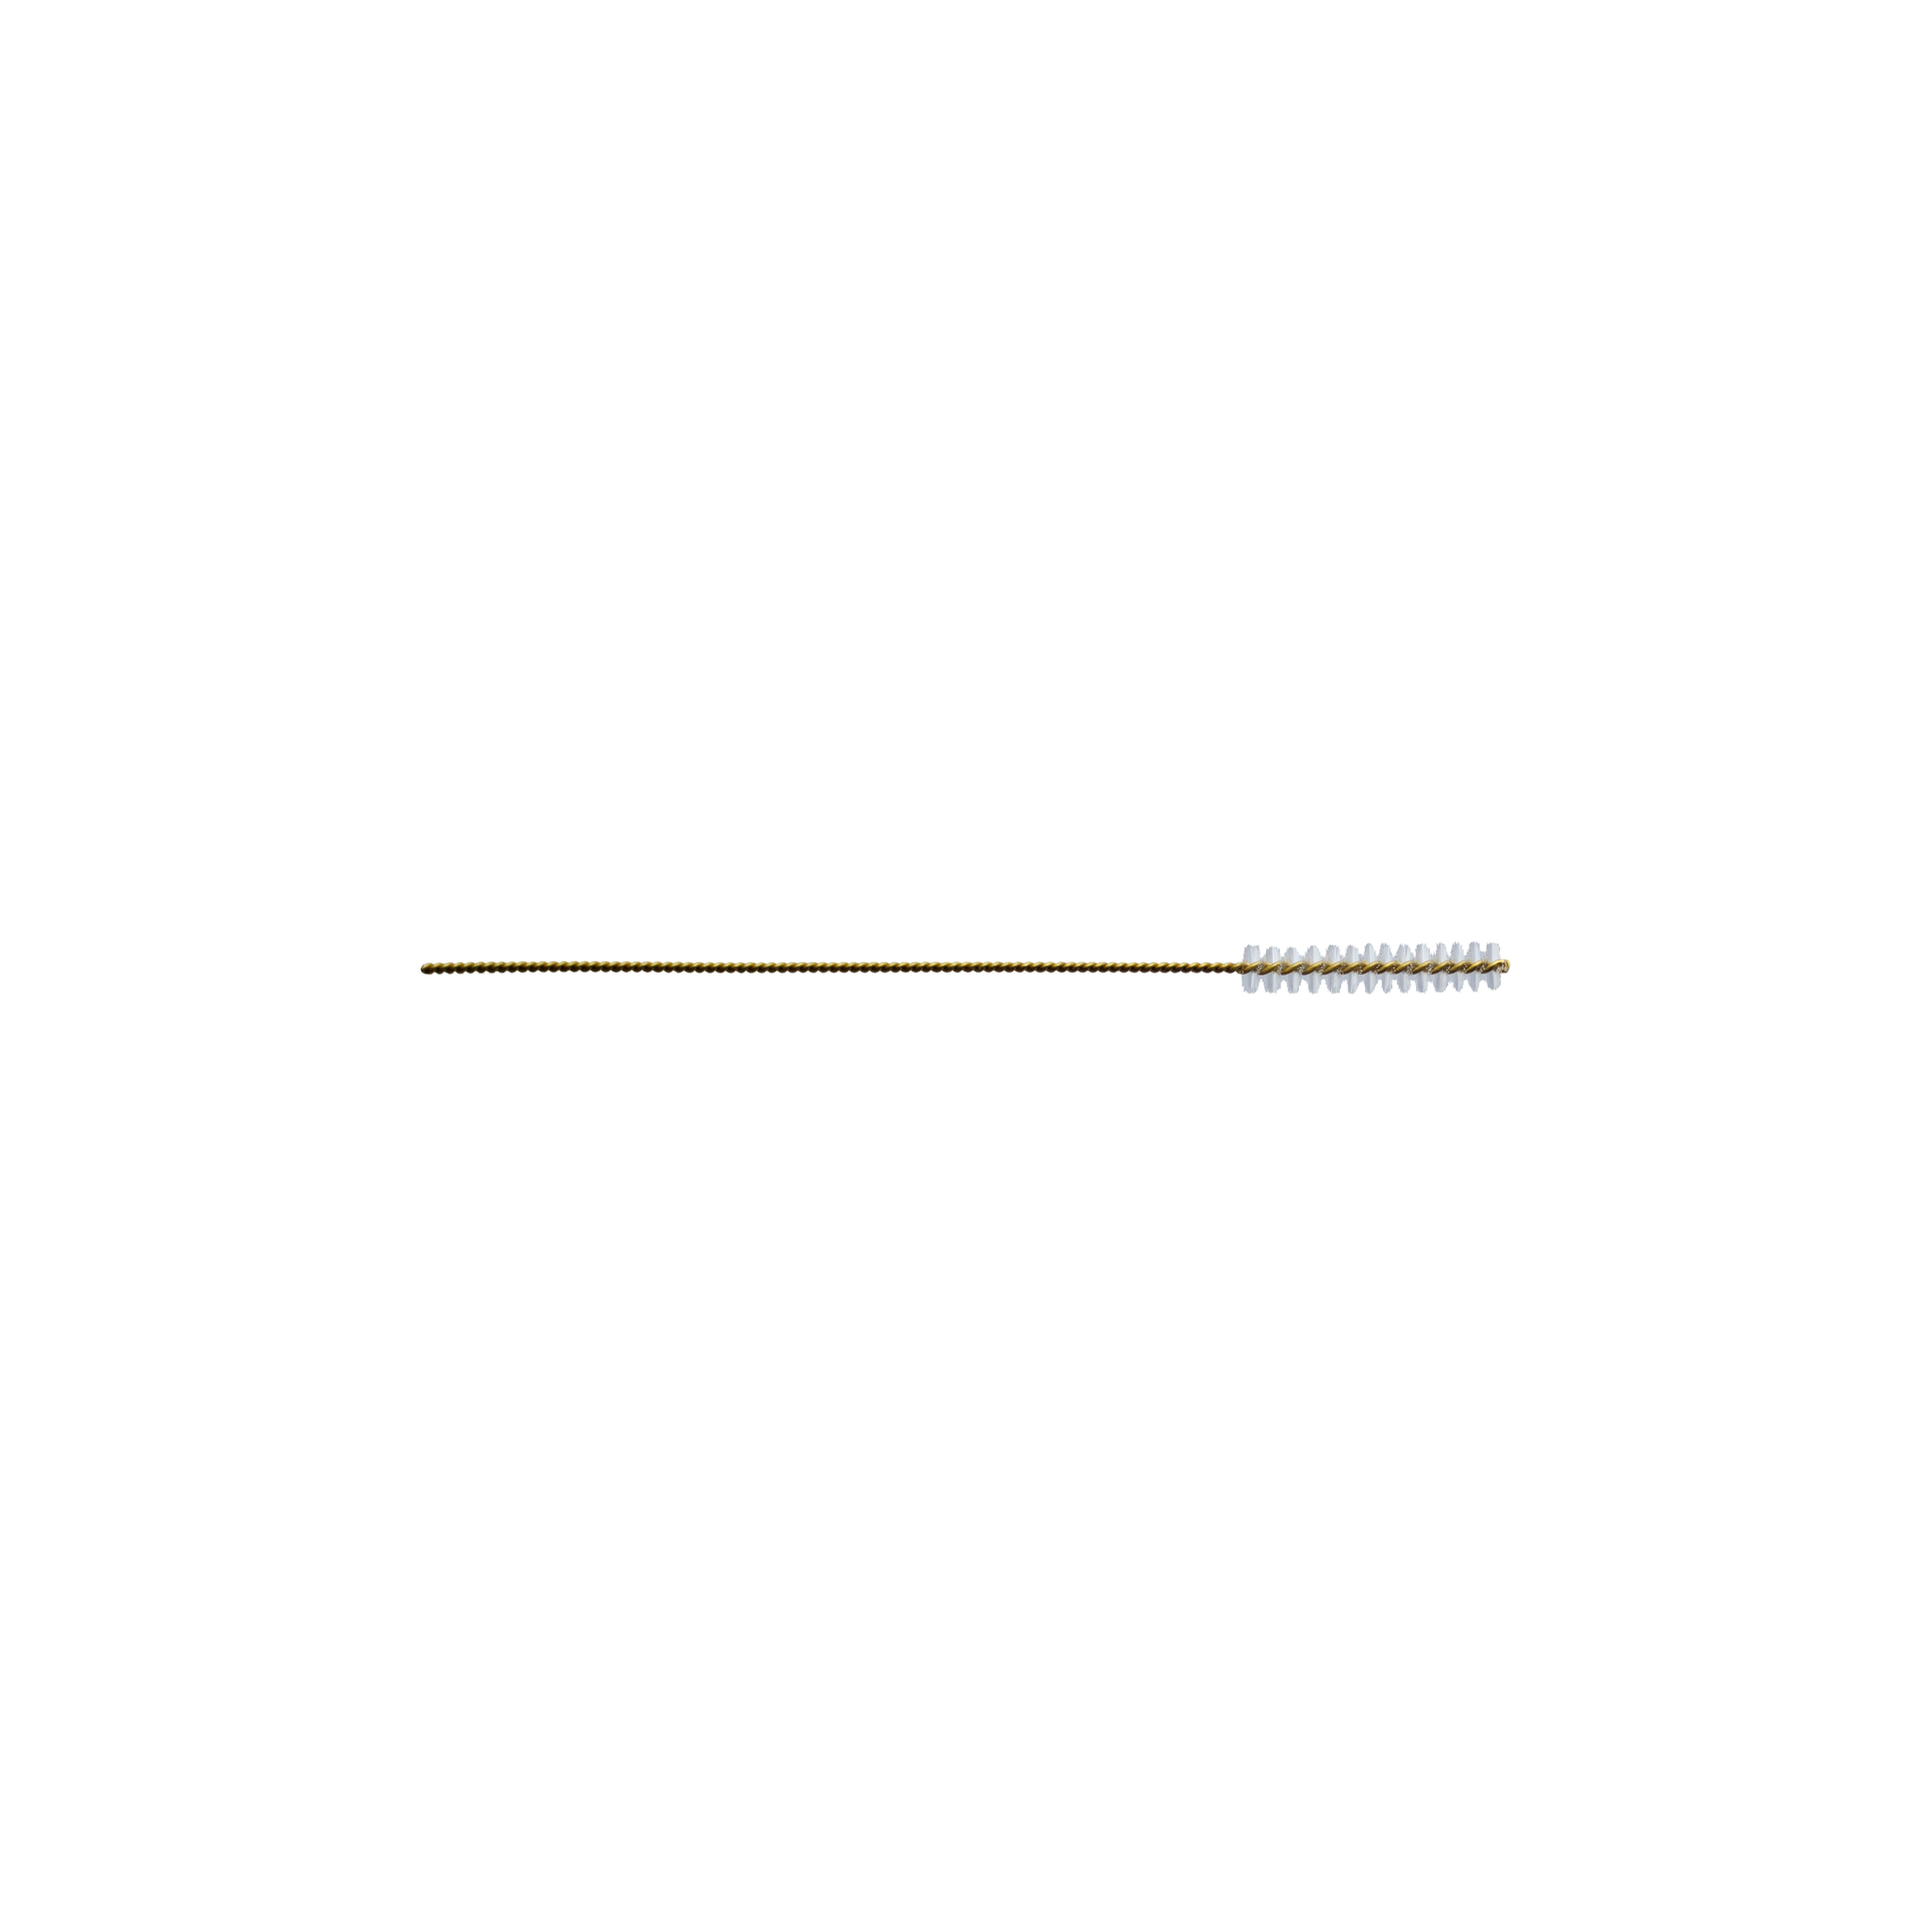 A singular gold C (smallest size) interproximal brush shown horizontally on a white background.